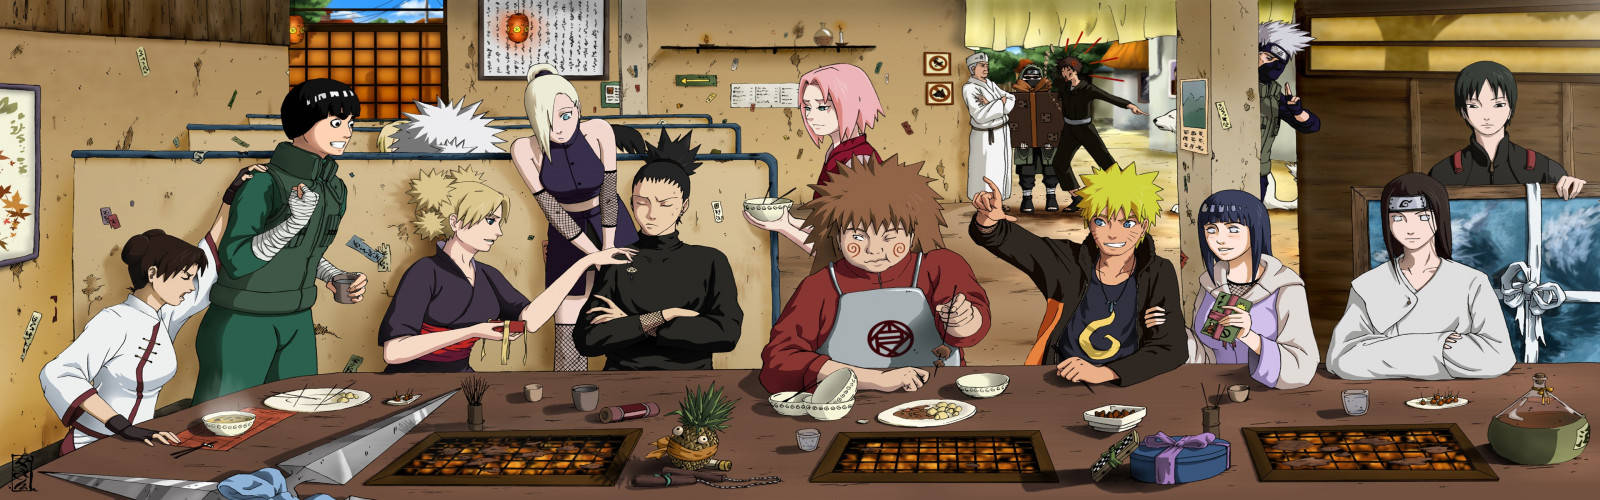 Naruto Girls At Izakaya Wallpaper